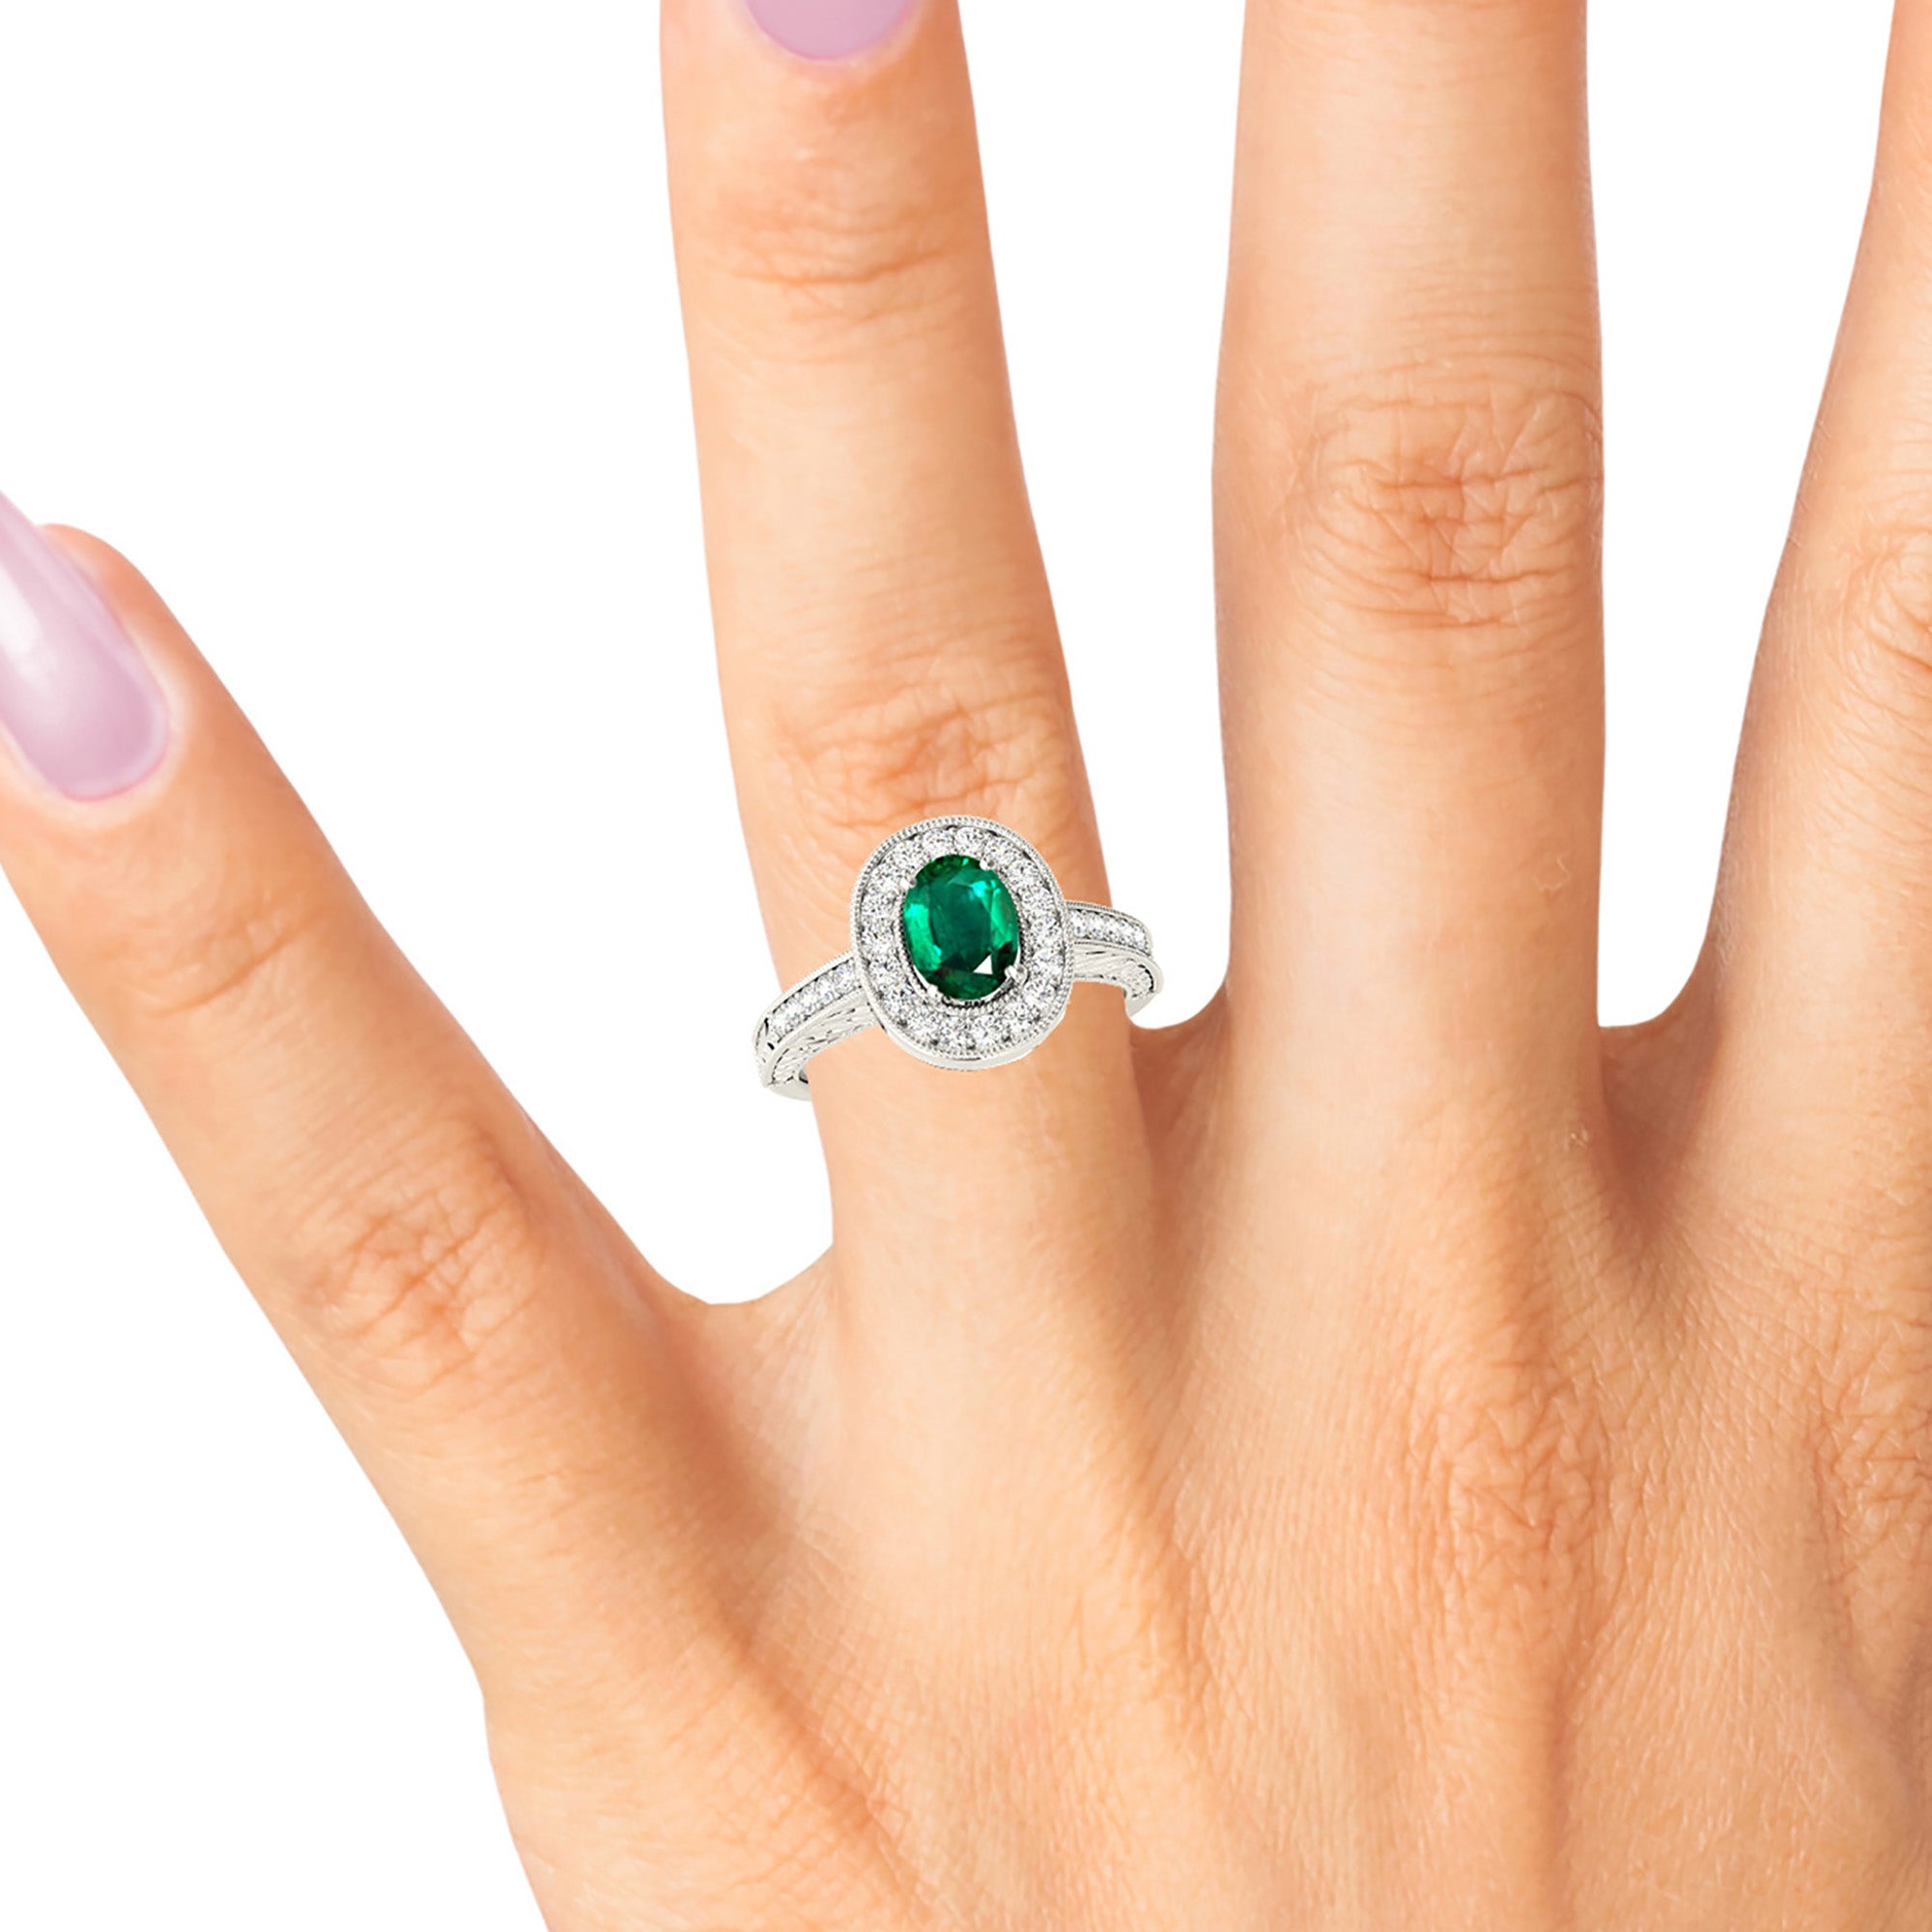 2.00 ct. Genuine Oval Emerald Ring With 0.35 ctw. Diamond Halo,Milgrain And Filigree Diamond Band-in 14K/18K White, Yellow, Rose Gold and Platinum - Christmas Jewelry Gift -VIRABYANI